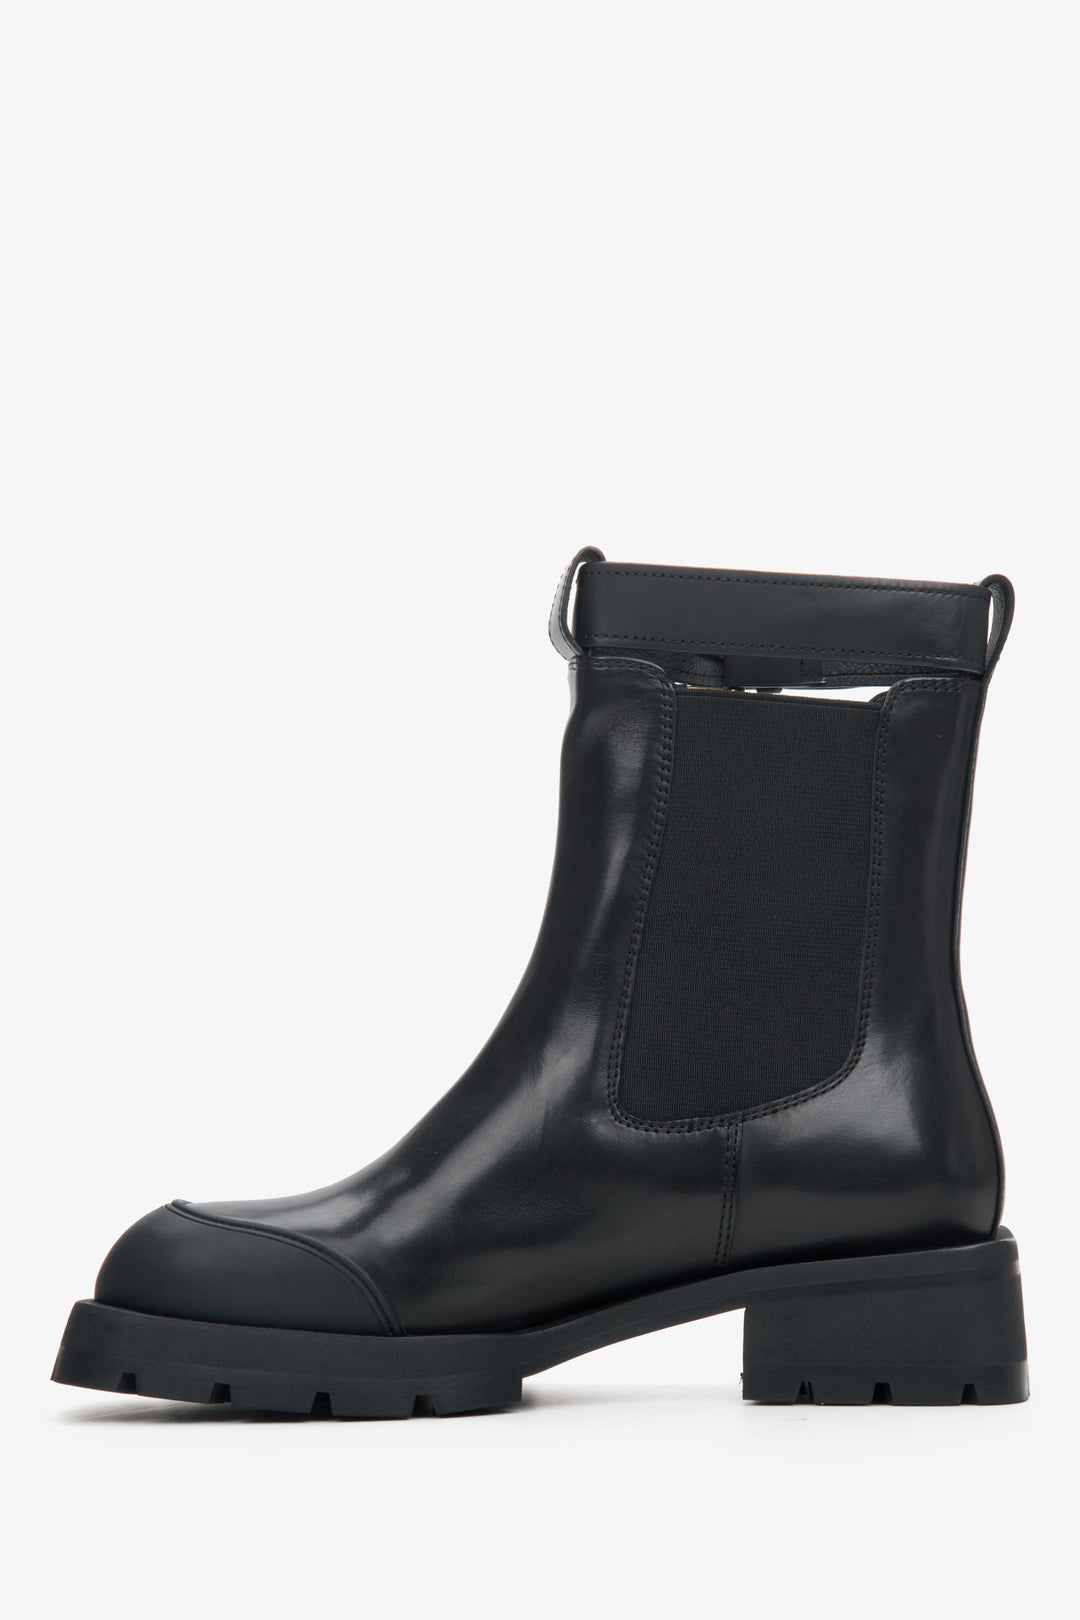 Women's Chelsea boots in black Estro - shoe profile.